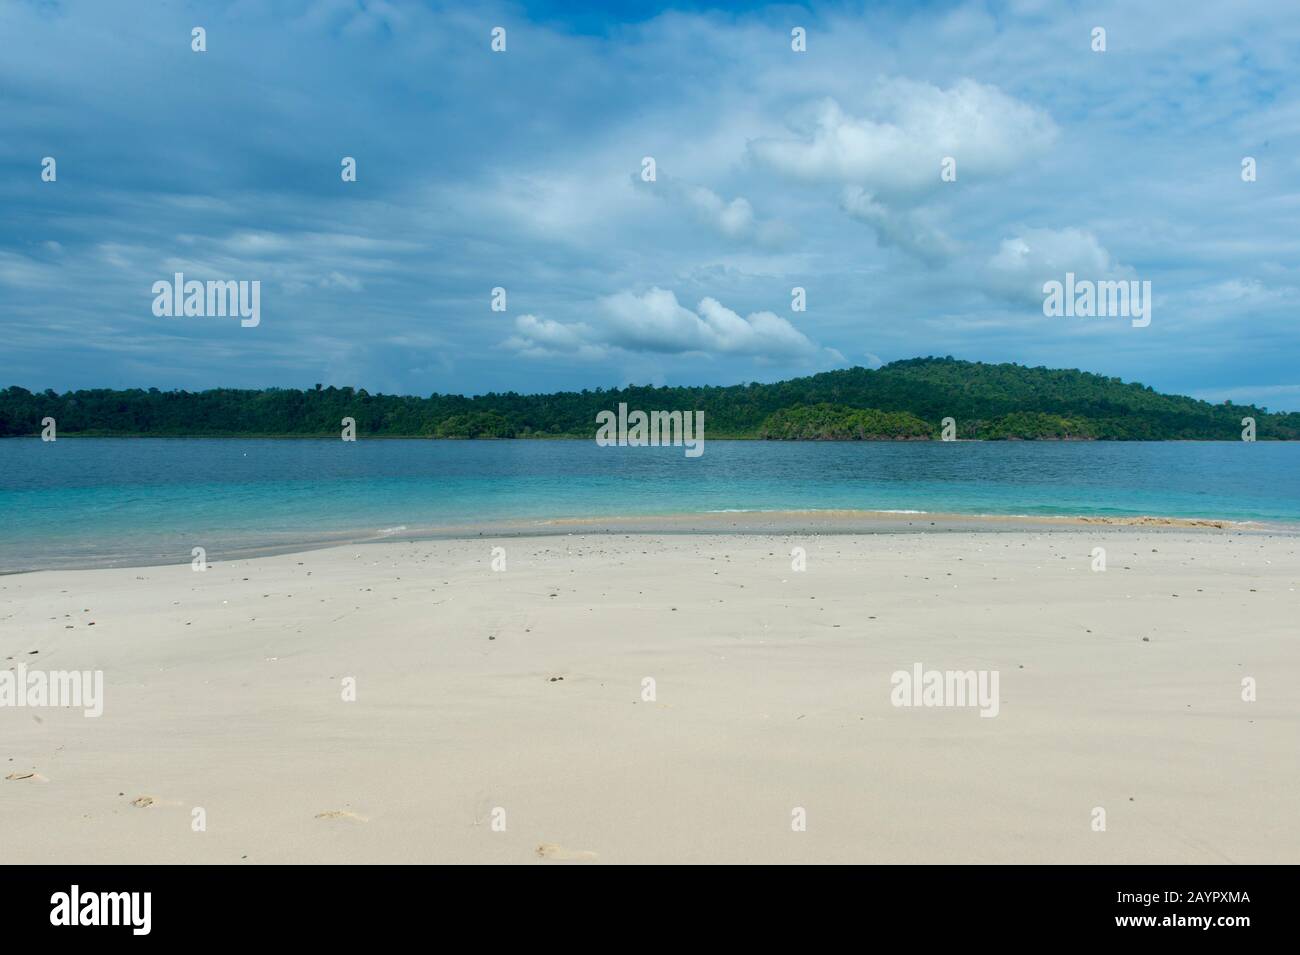 The white sand beach of the small island of Granito de Oro in Coiba National Park in Panama. Stock Photo